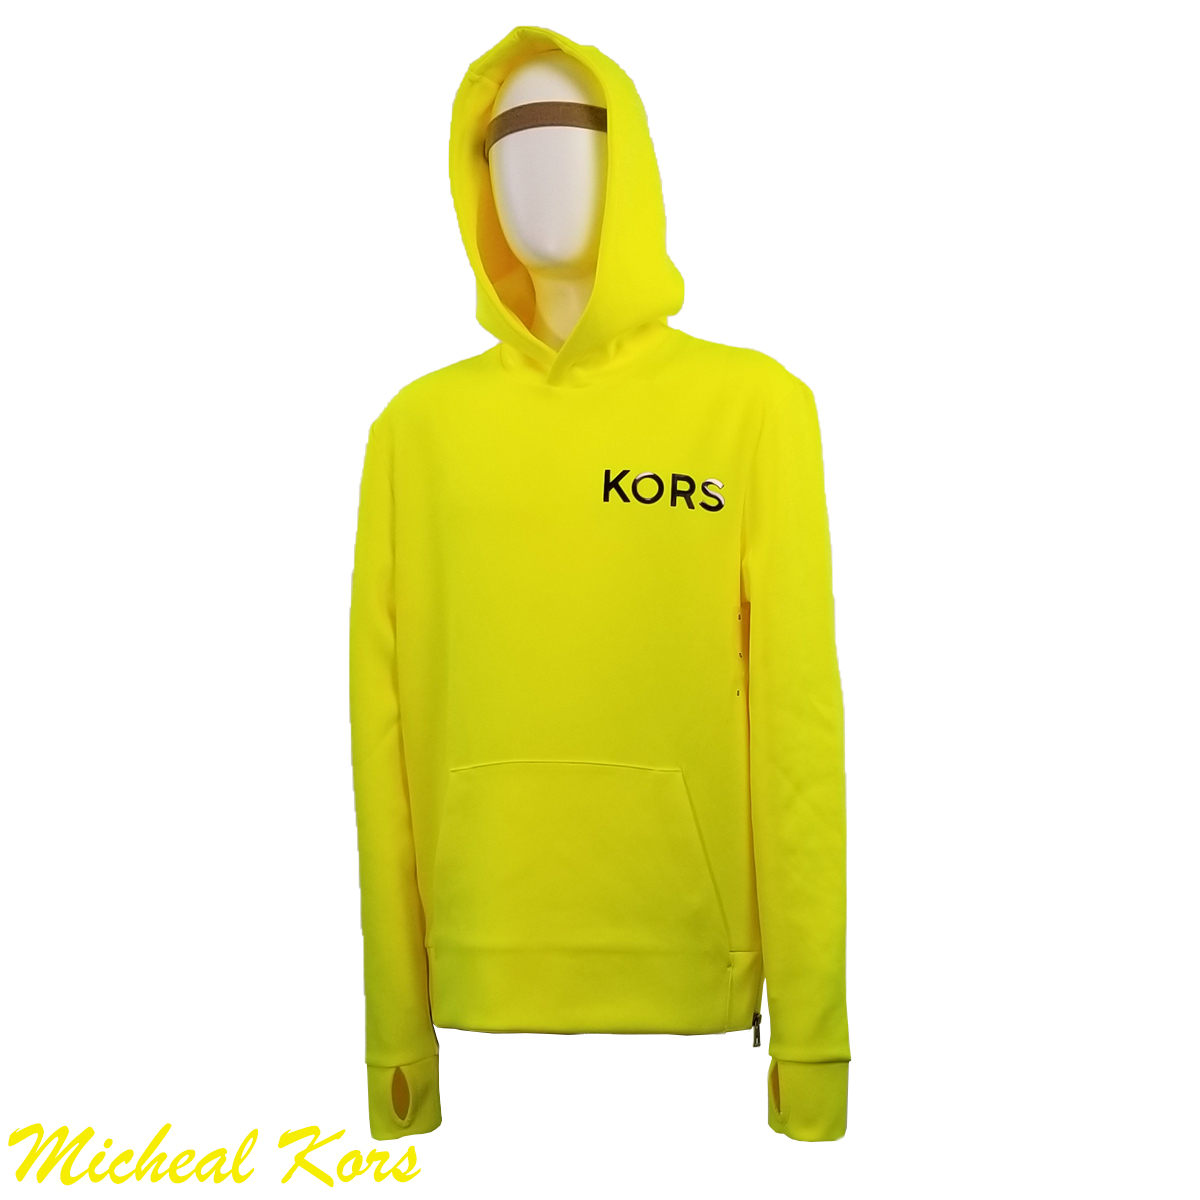 Michael Kors Neon Yellow Hoodie Sport Sweater in CA - Moda Italy Fashion